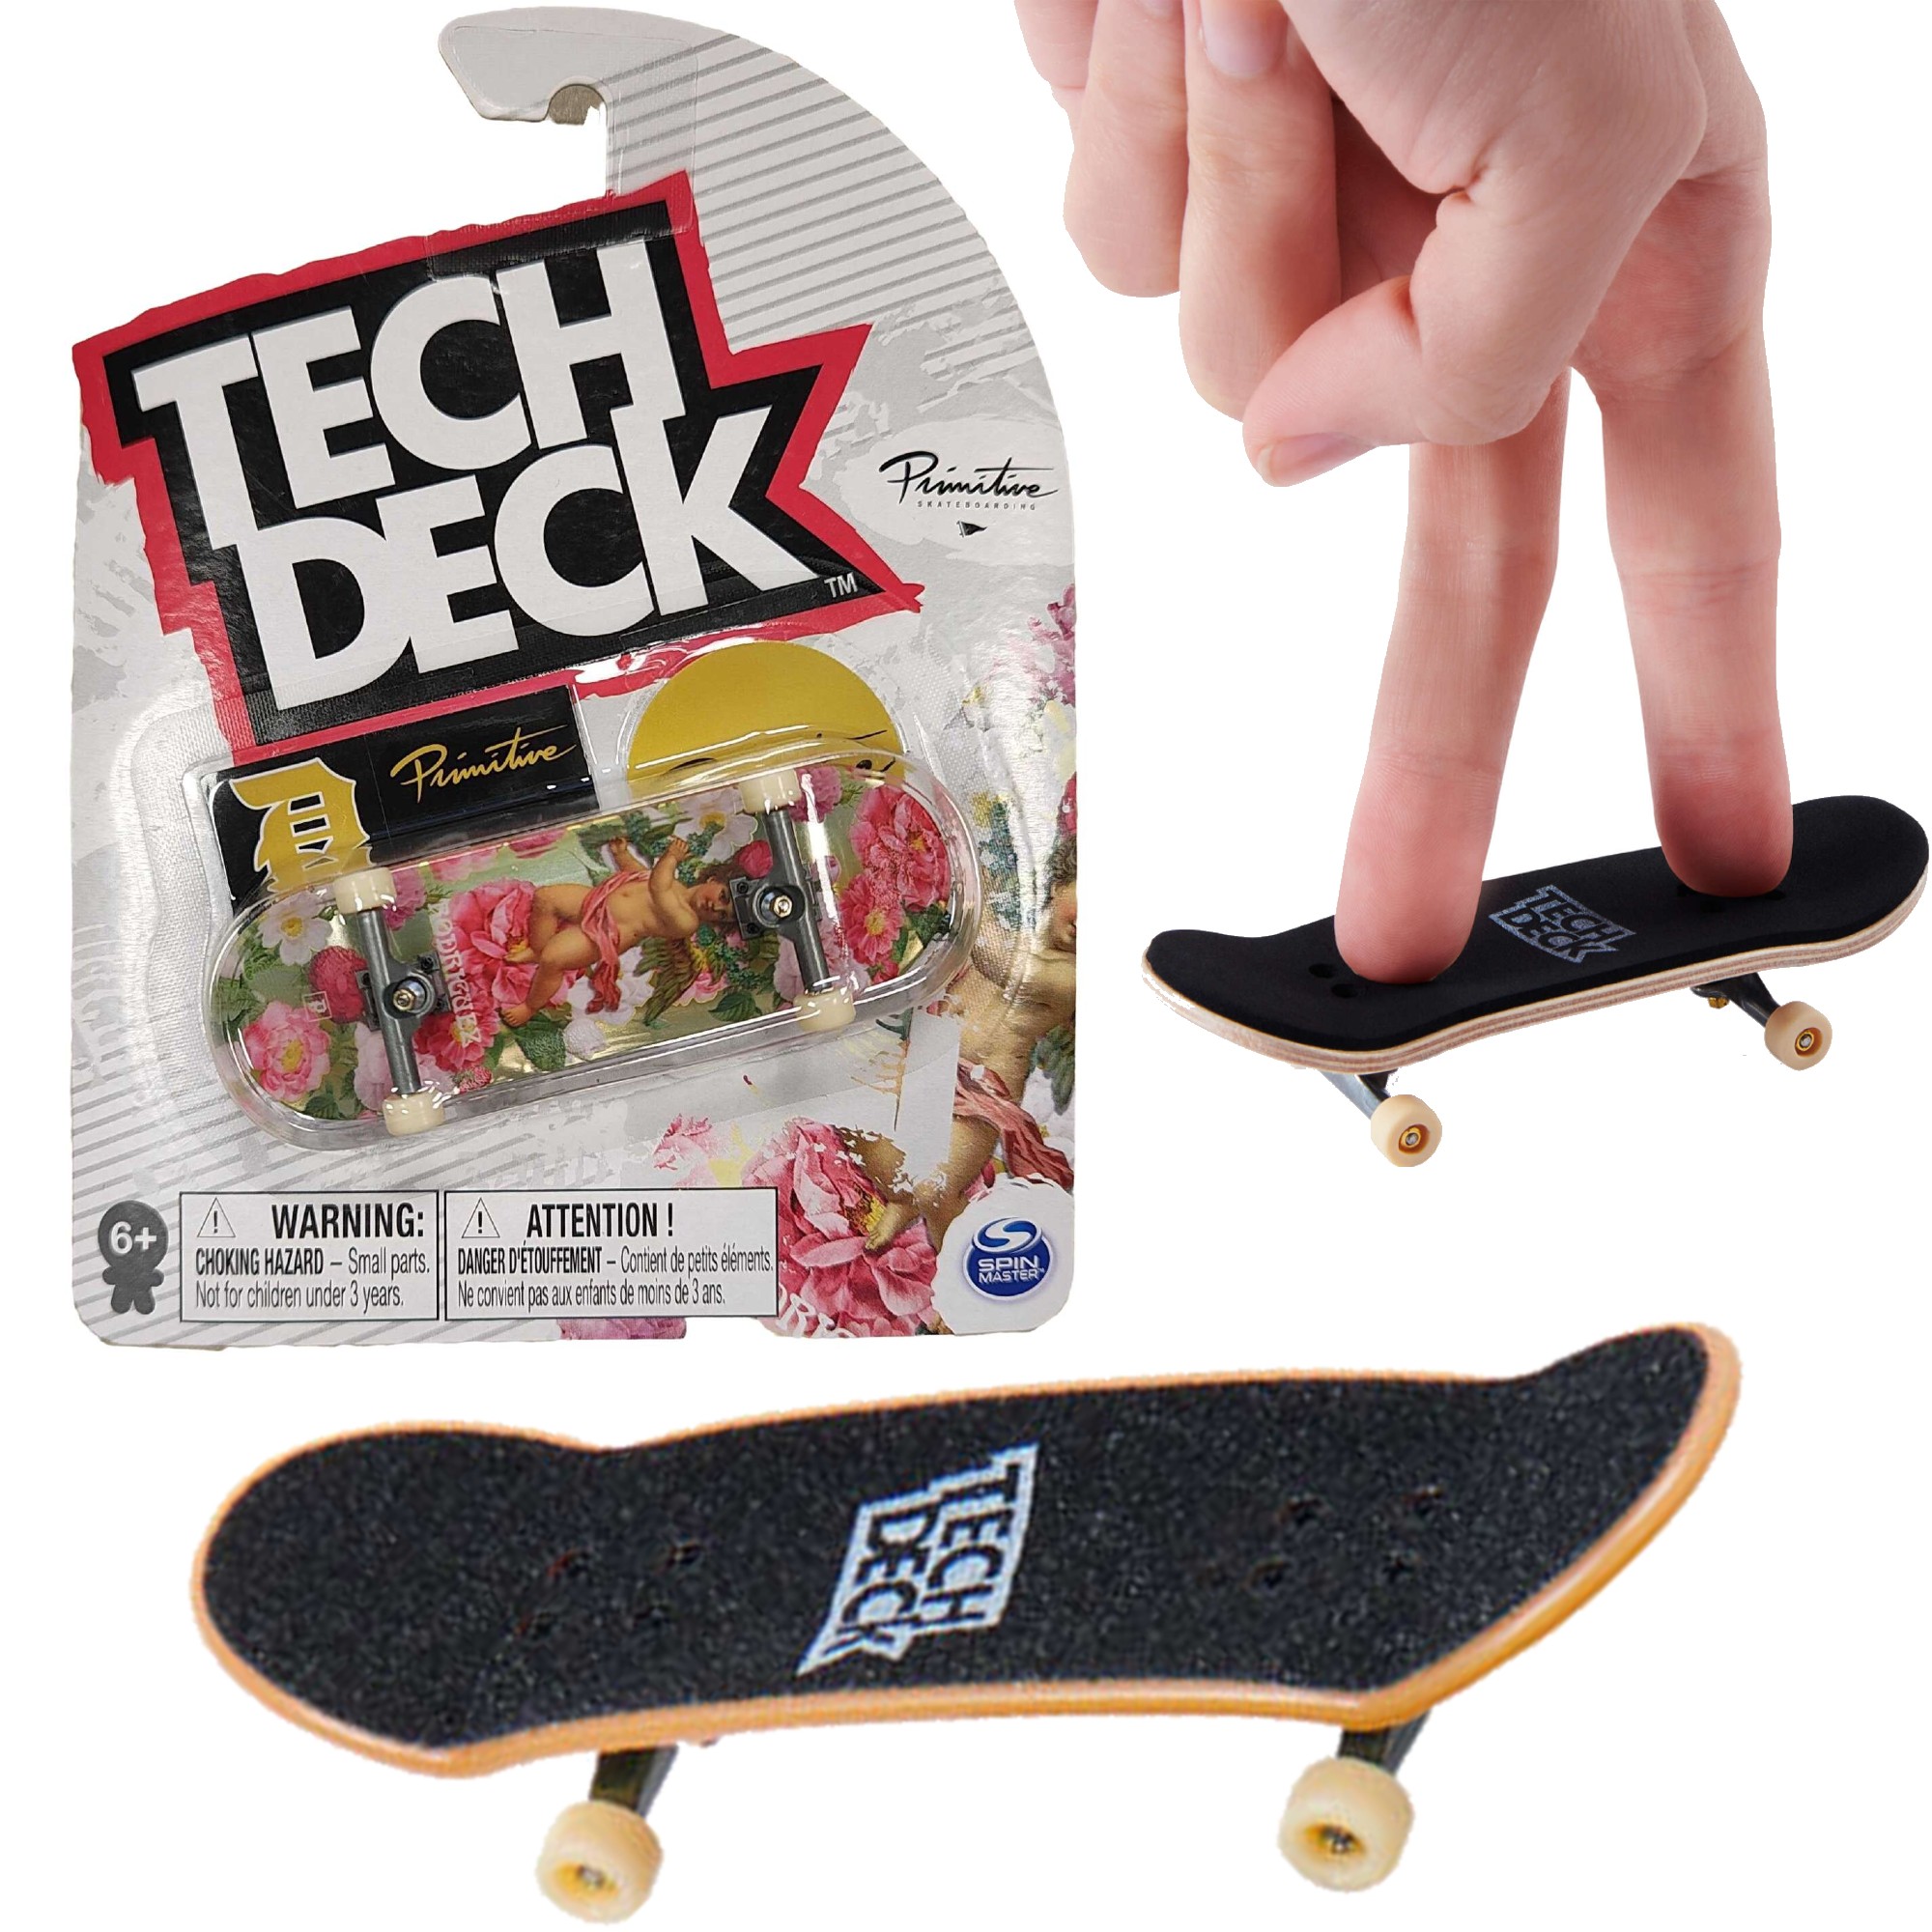 Tech Deck deskorolka Primitive Rodriguez fingerboard + naklejki